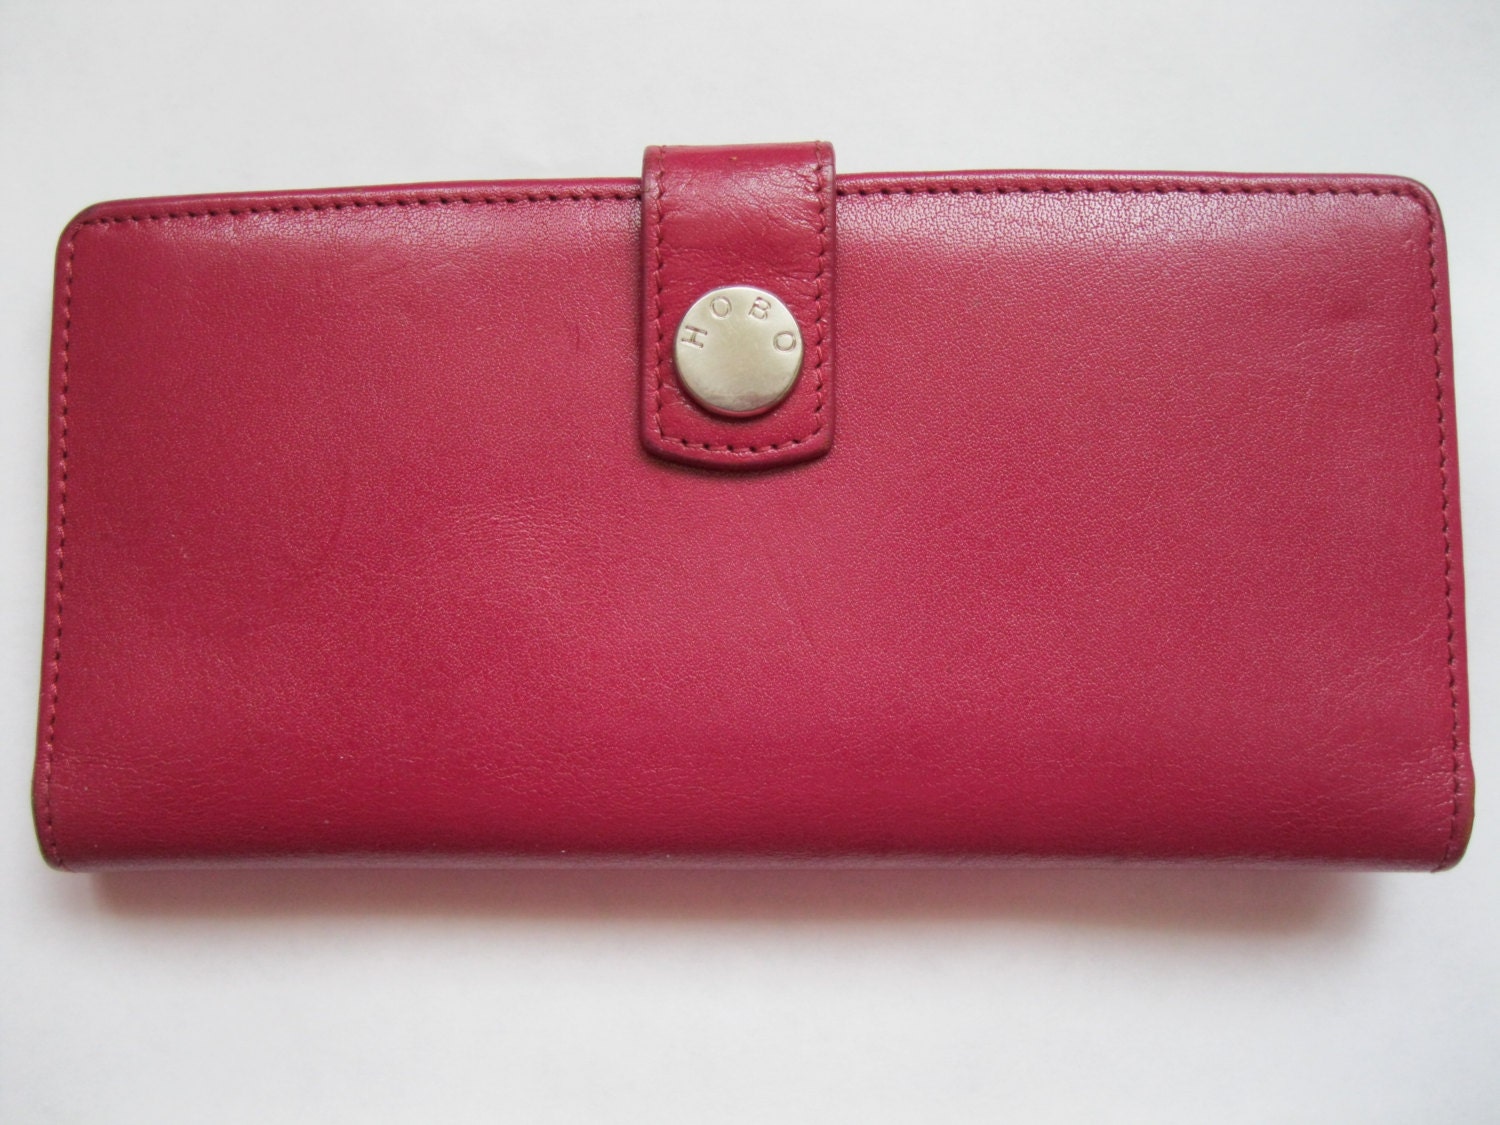 Hobo International Pink Bi-fold Wallet Vintage